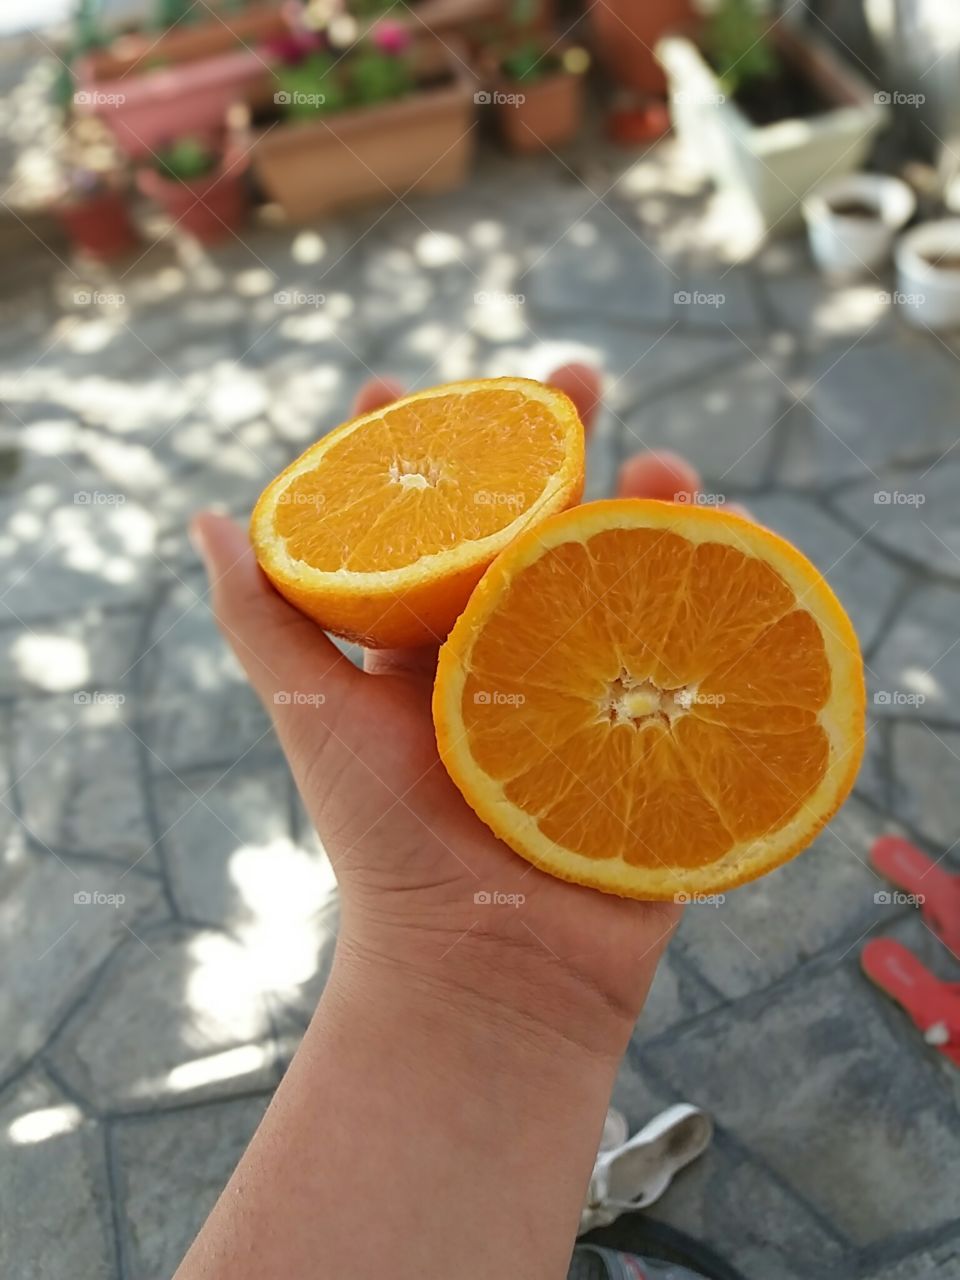 Natural Fruit